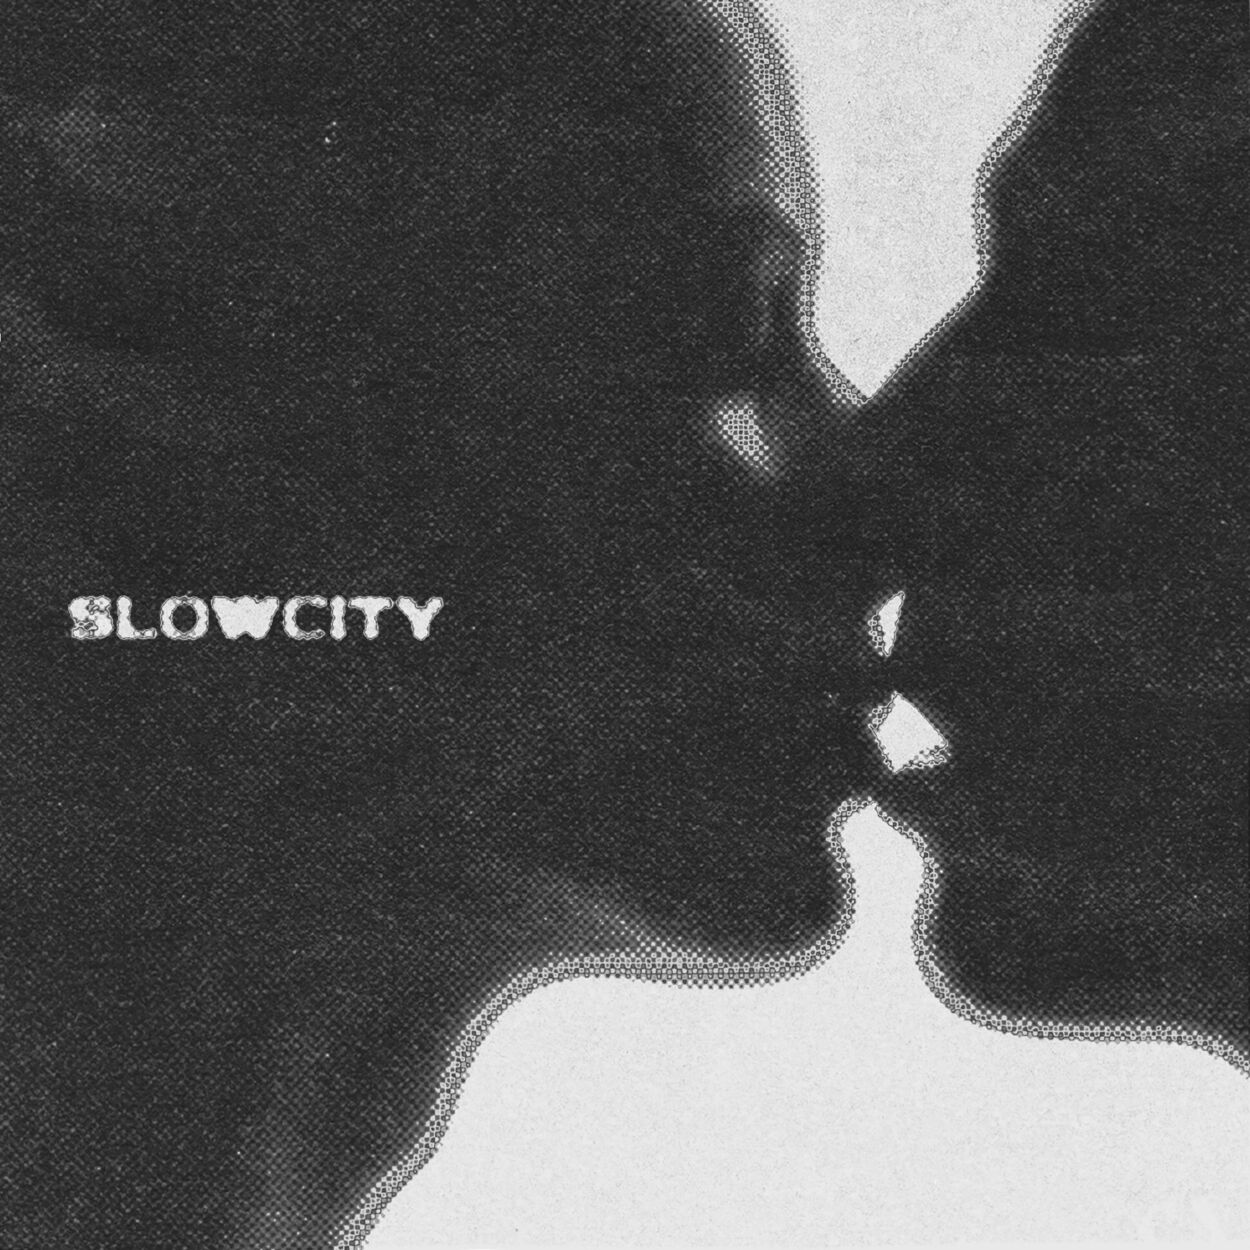 Slowcity – Love me – EP